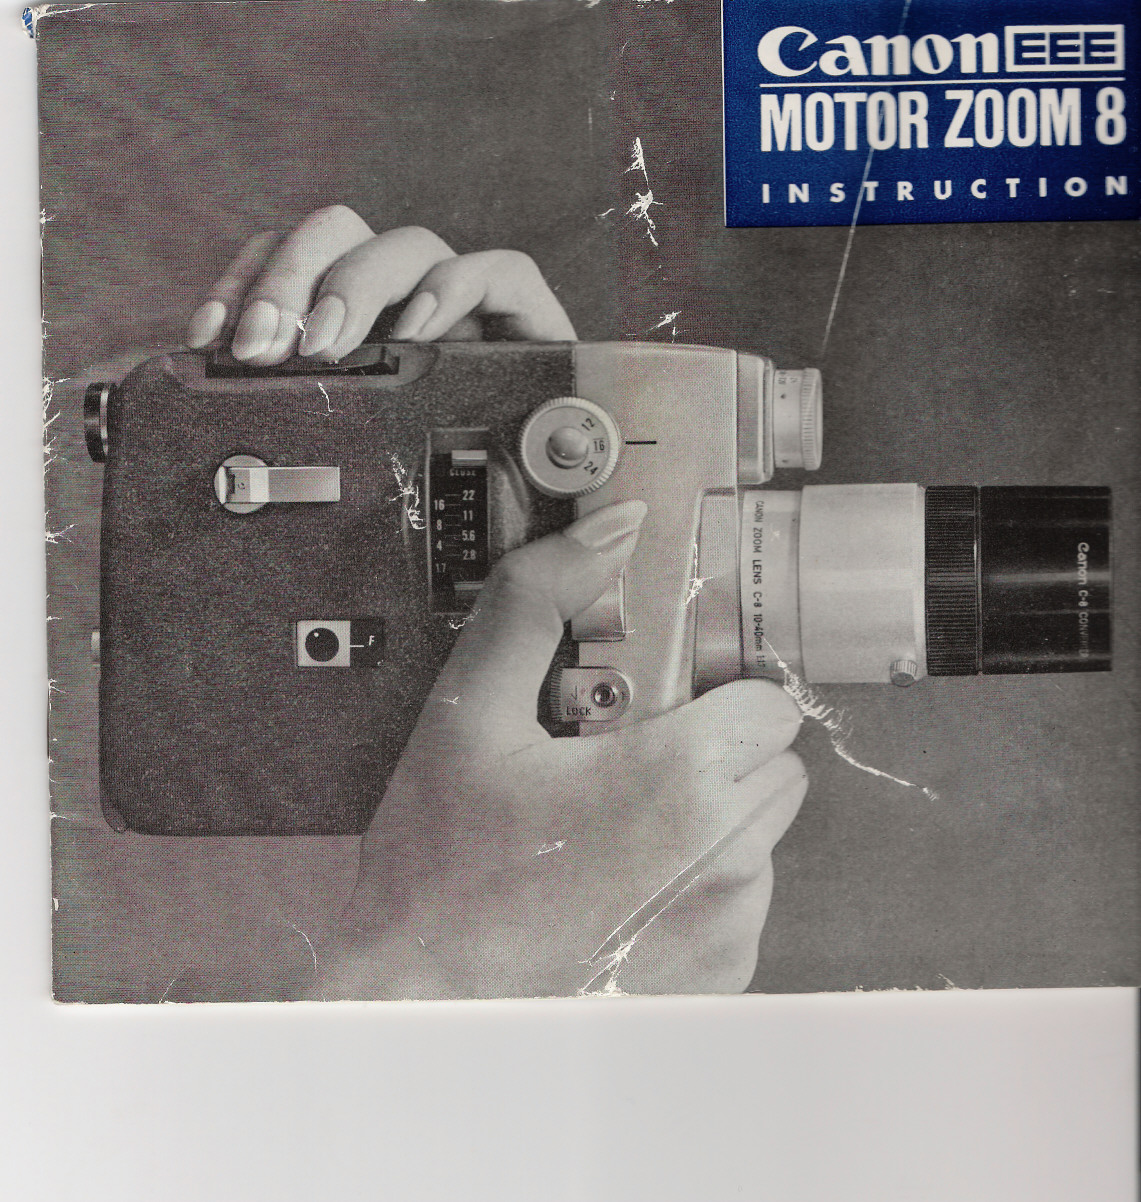 Canon EEE MOTOR ZOOM 8 User Manual